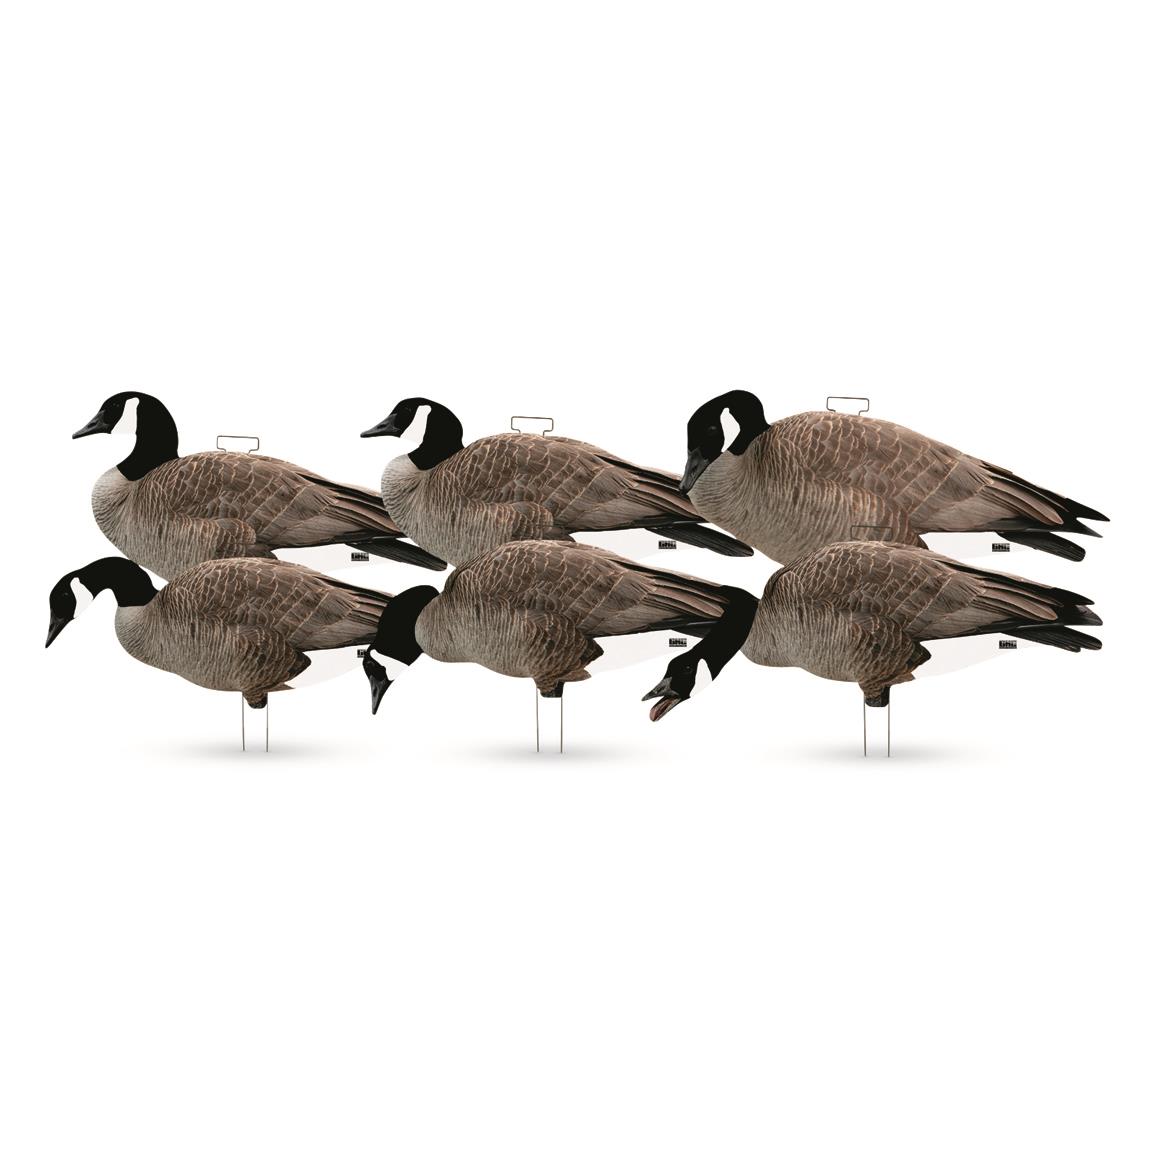 Avery GHG Pro-Grade Flocked Head Canada Goose Silhouette Decoys, 6 Piece Set